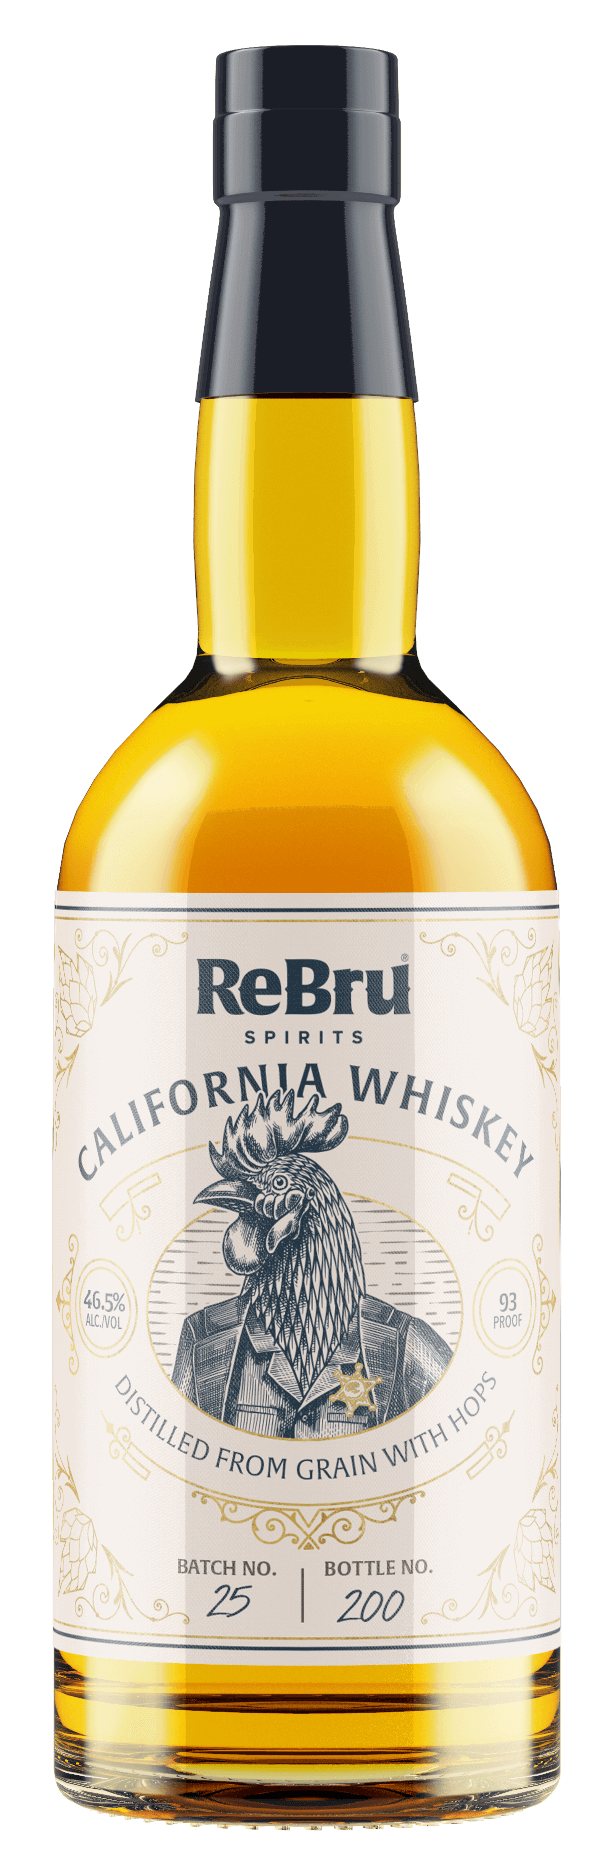 Rebru California Whiskey